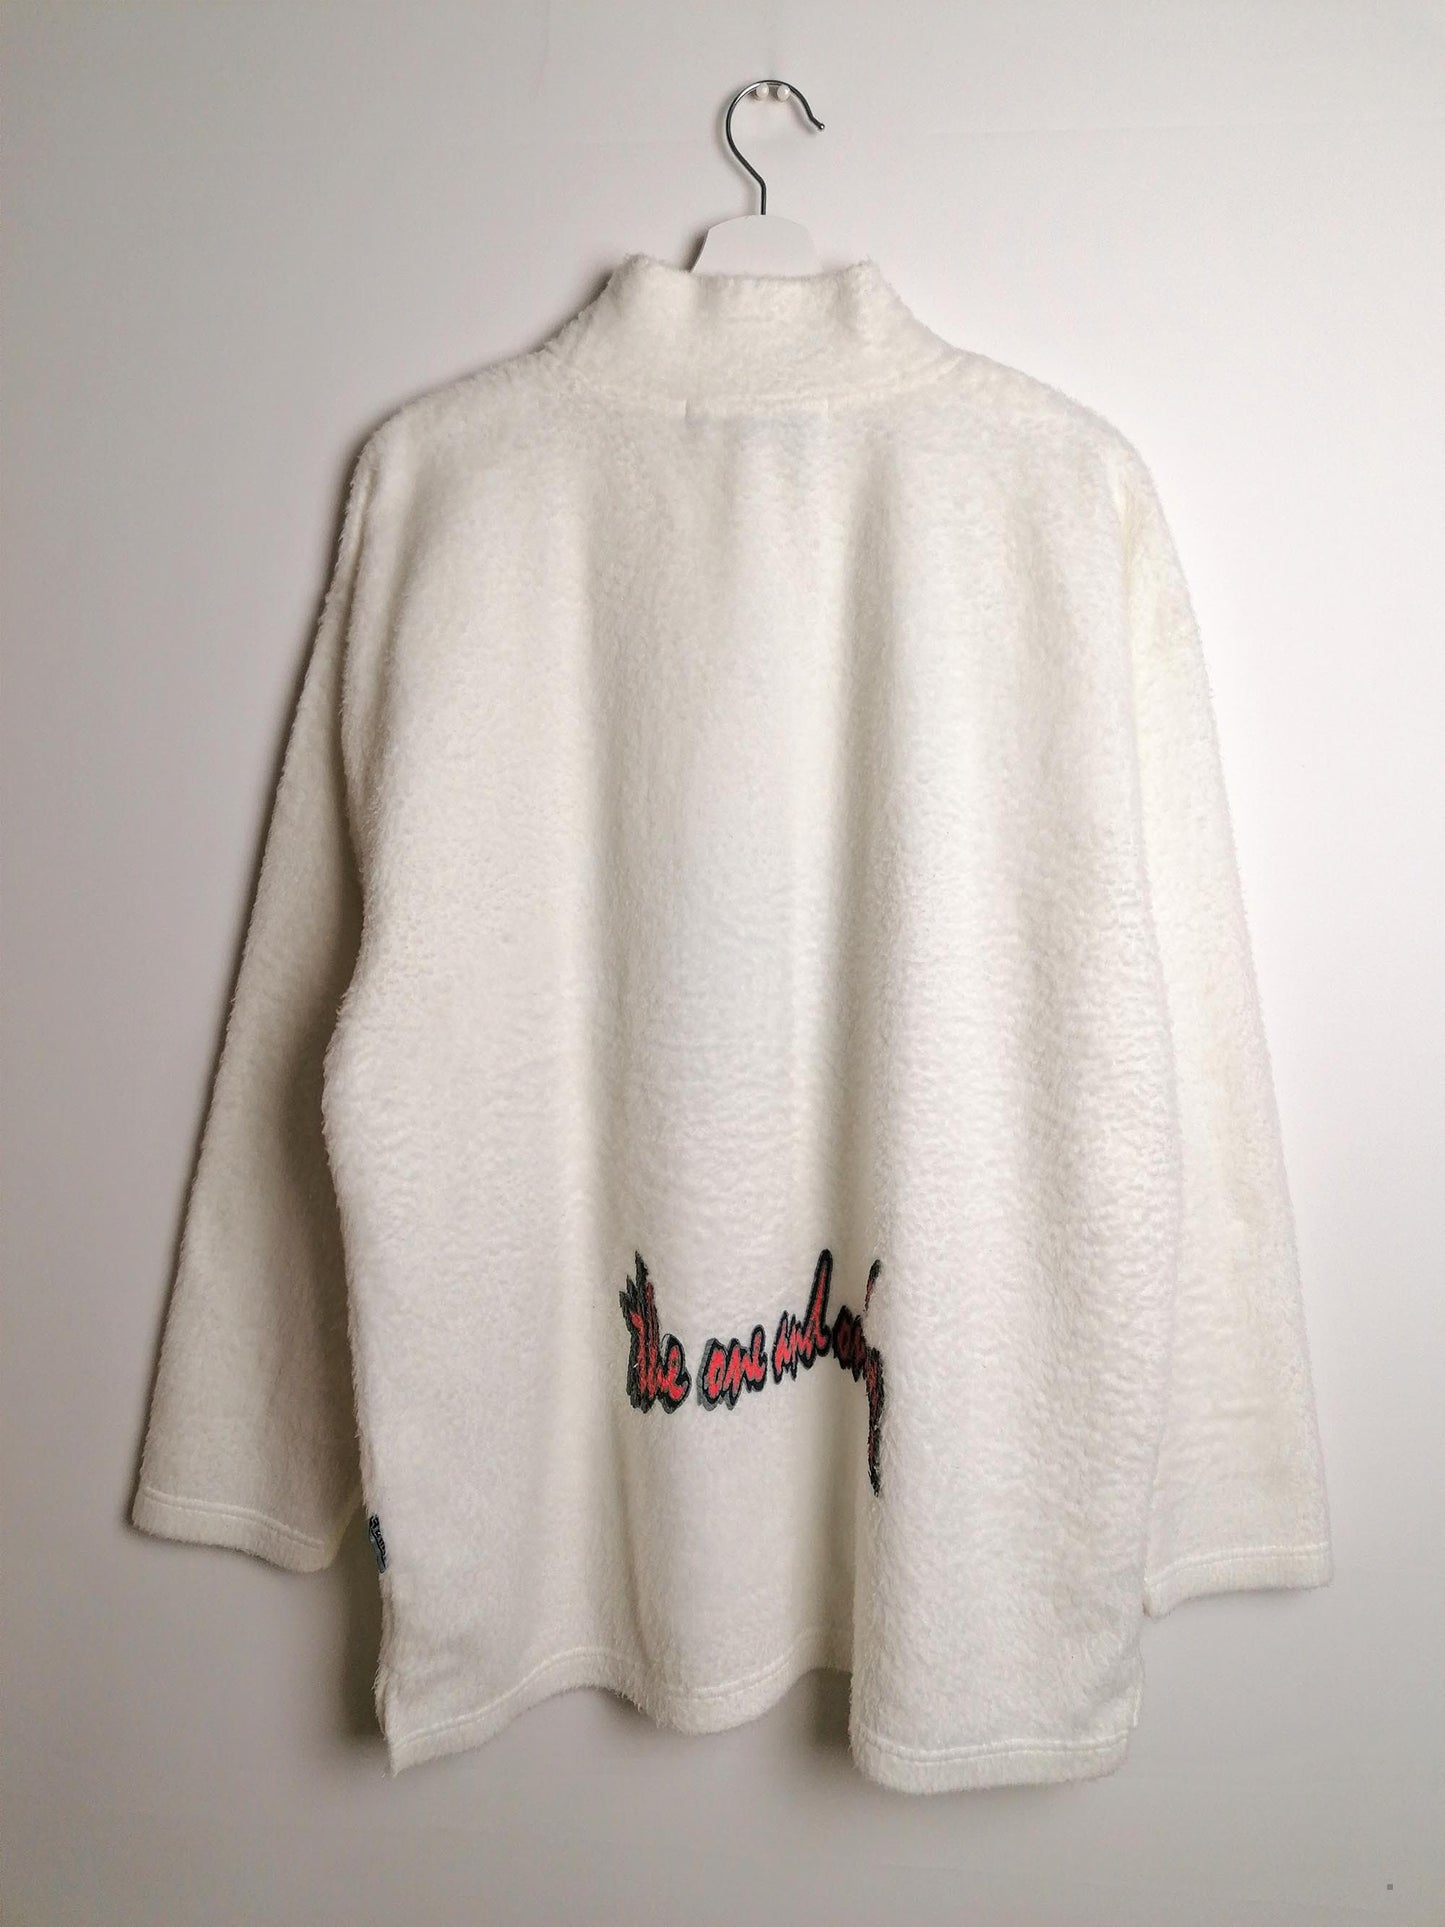 90's REMIX Fleece - size L-XL